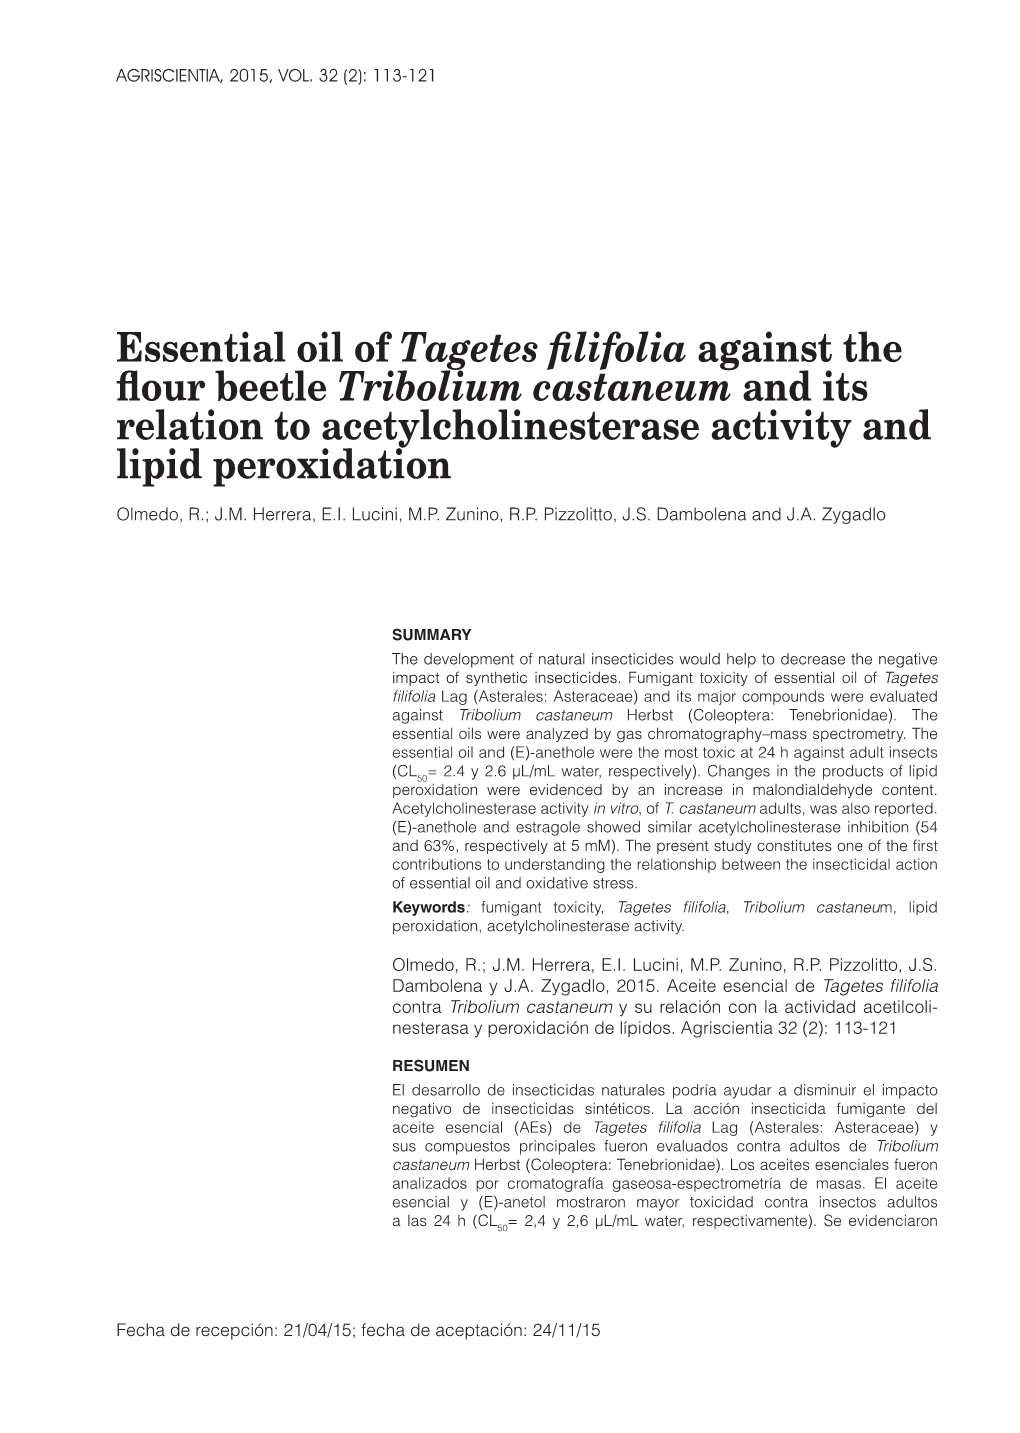 Essential Oil of Tagetes Filifolia Against the Flour Beetle Tribolium